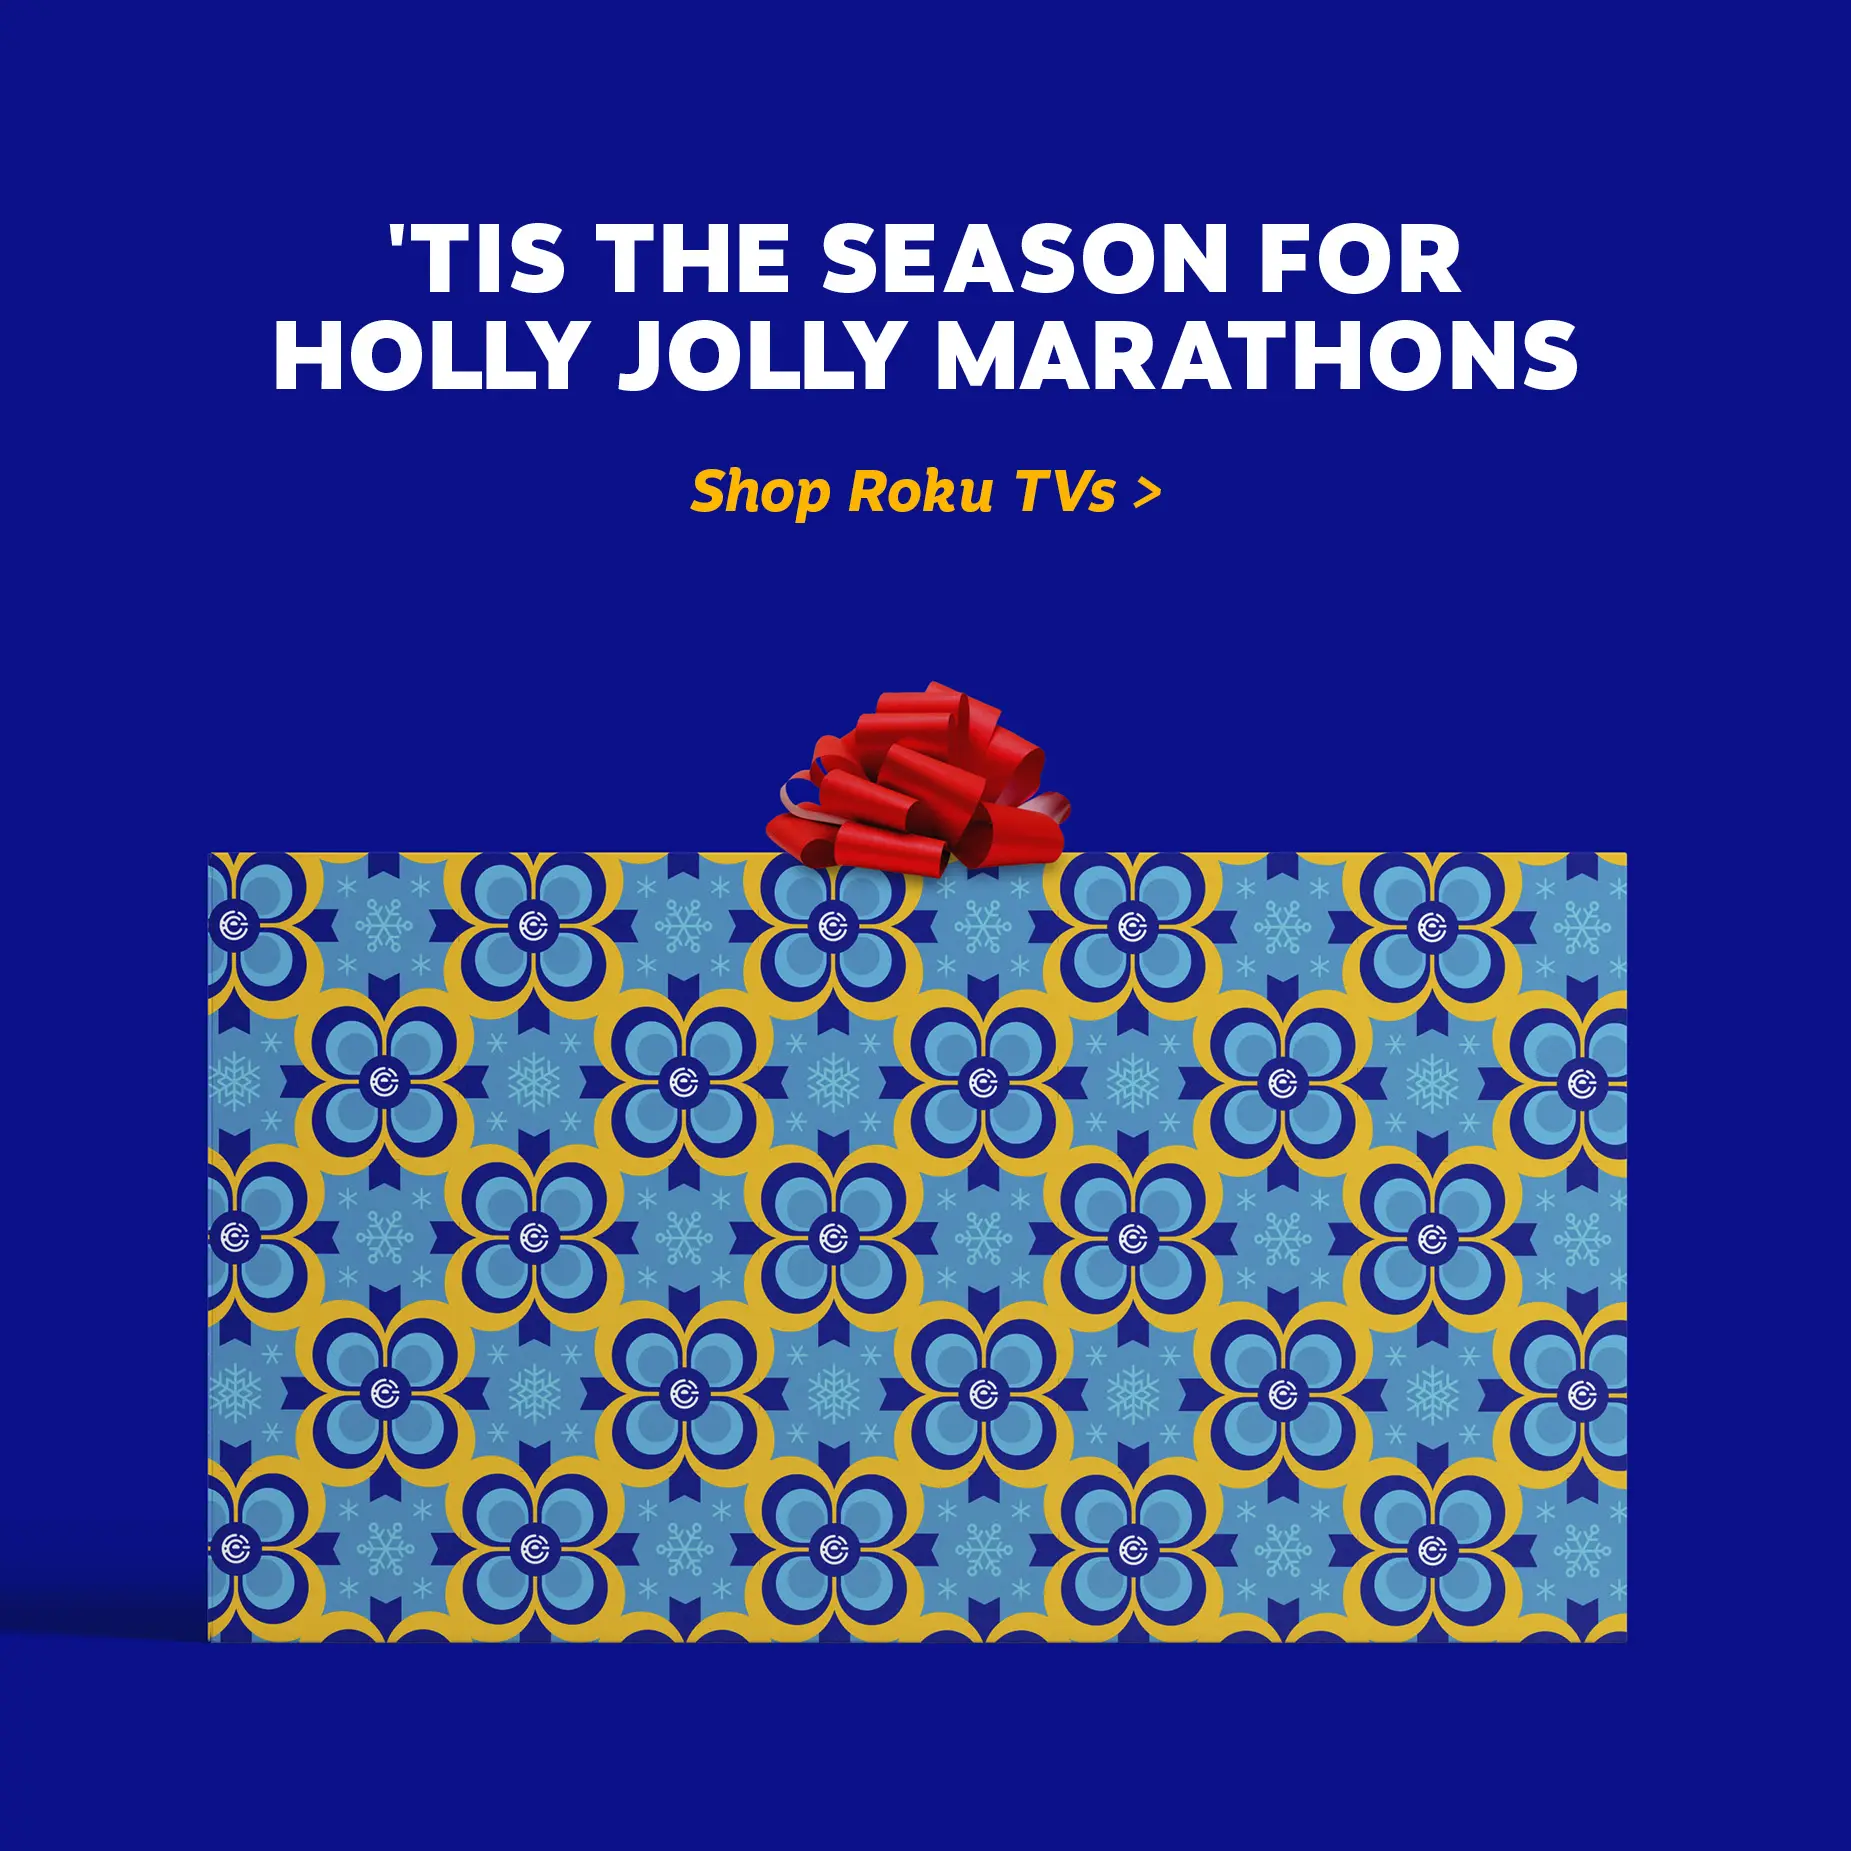 'Tis the season for holly jolly marathons